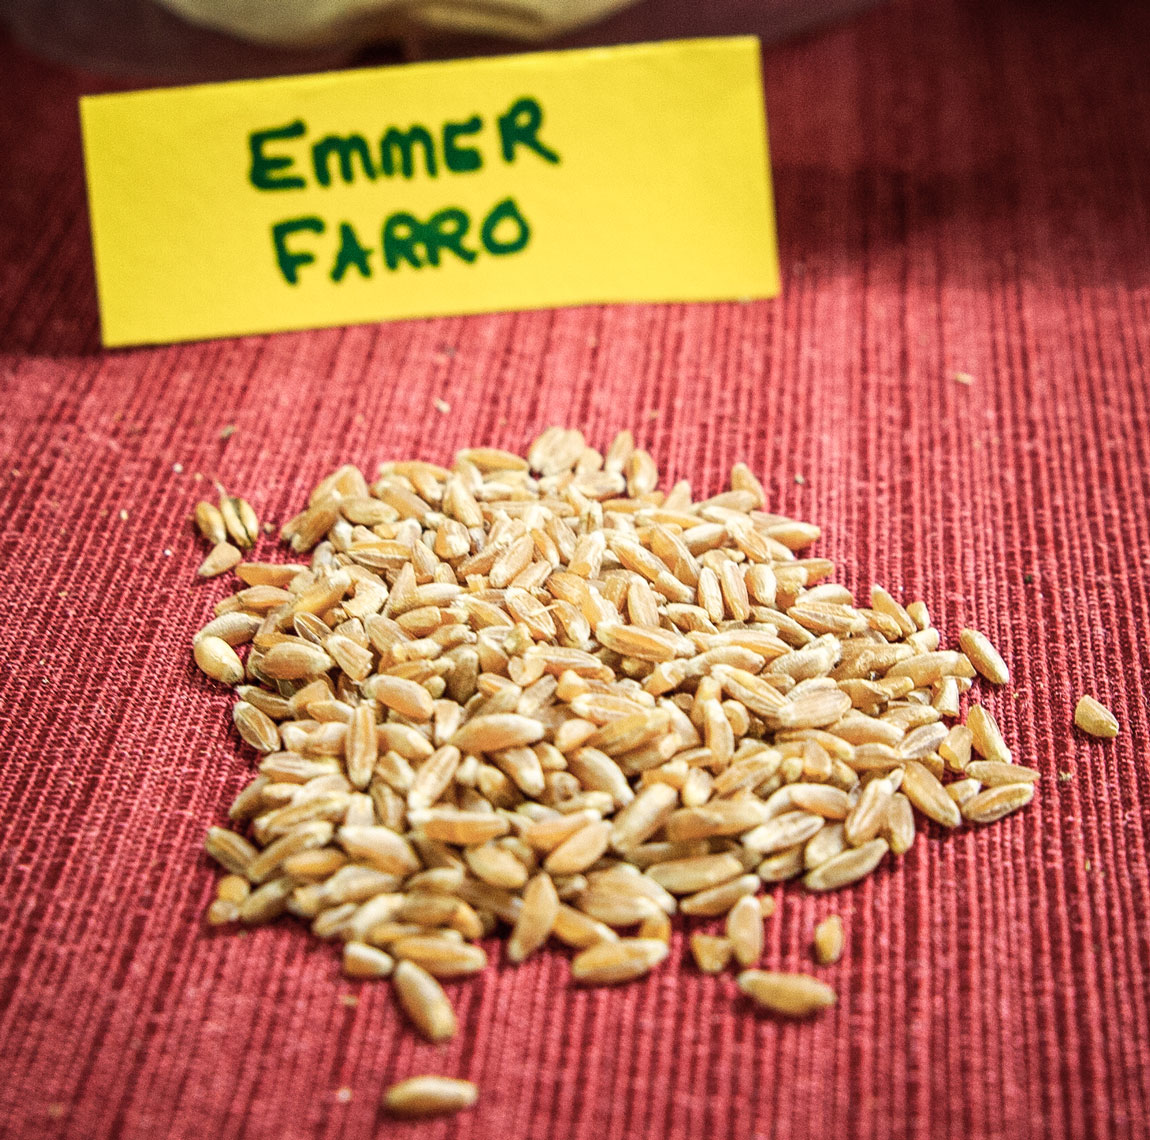 A small pile of Emmer Farro grain.